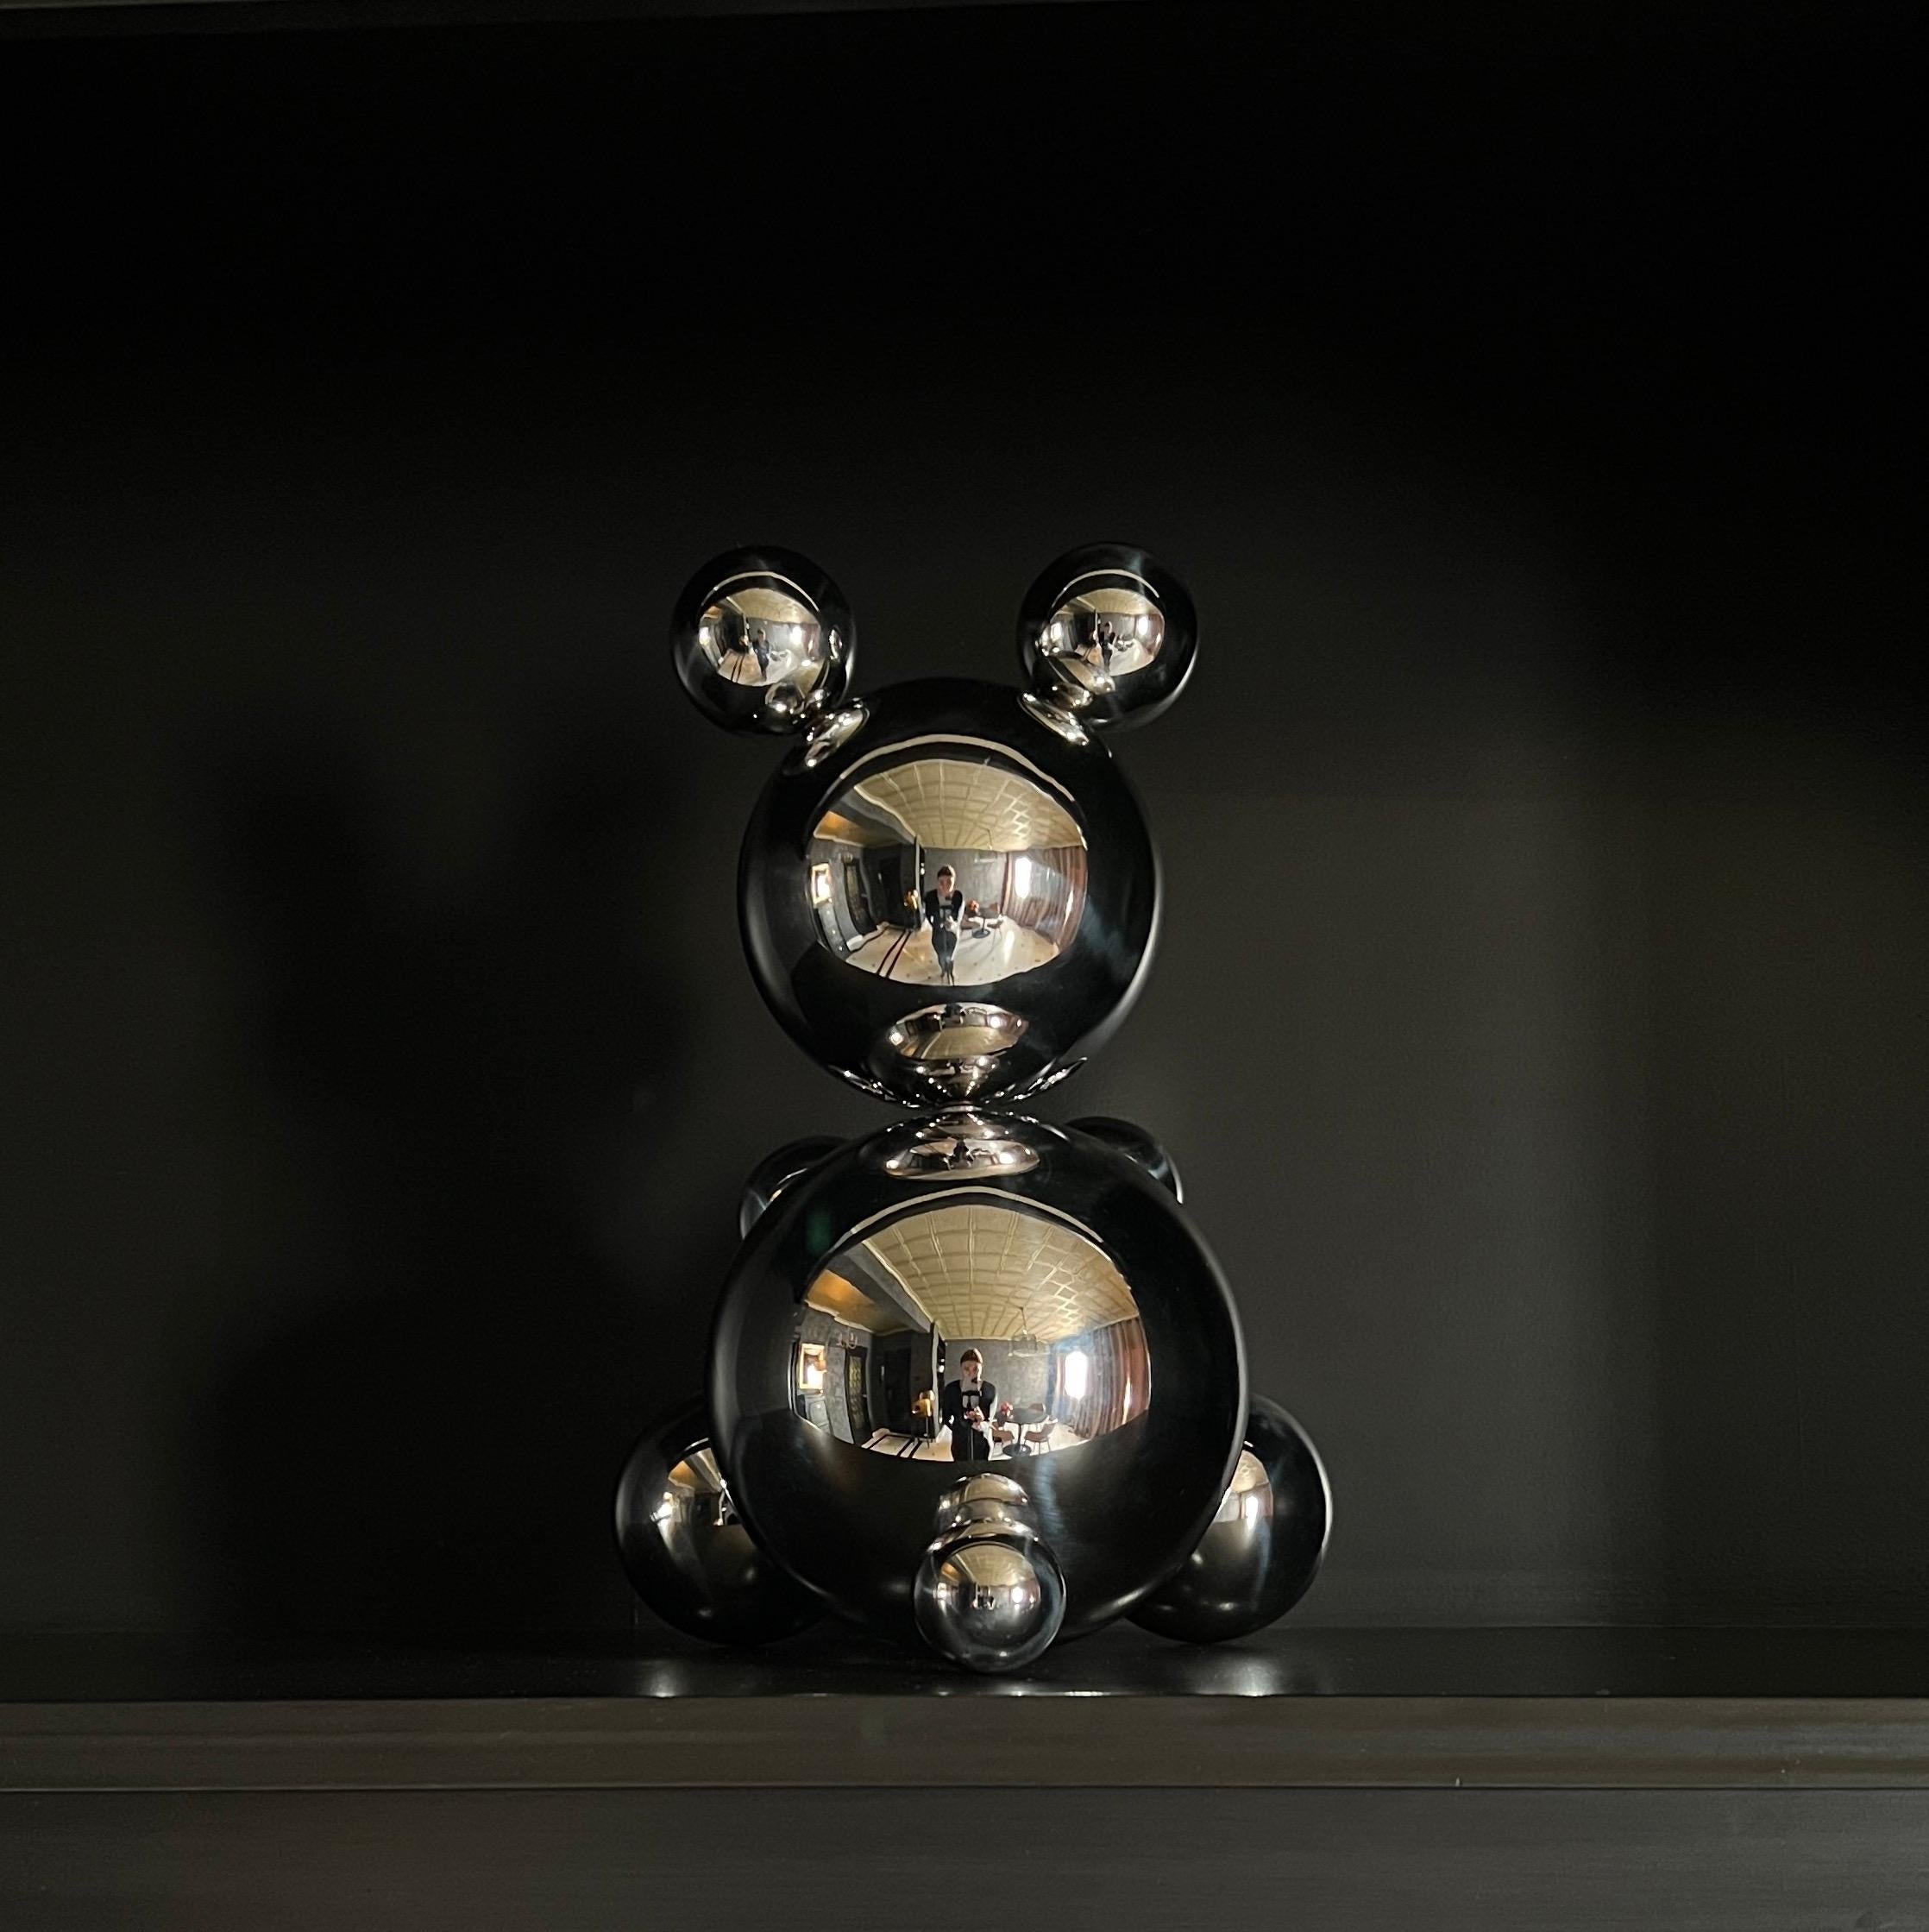 Middle Stainless Steel Bear 'Albert' Sculpture Minimalistic Animal 3